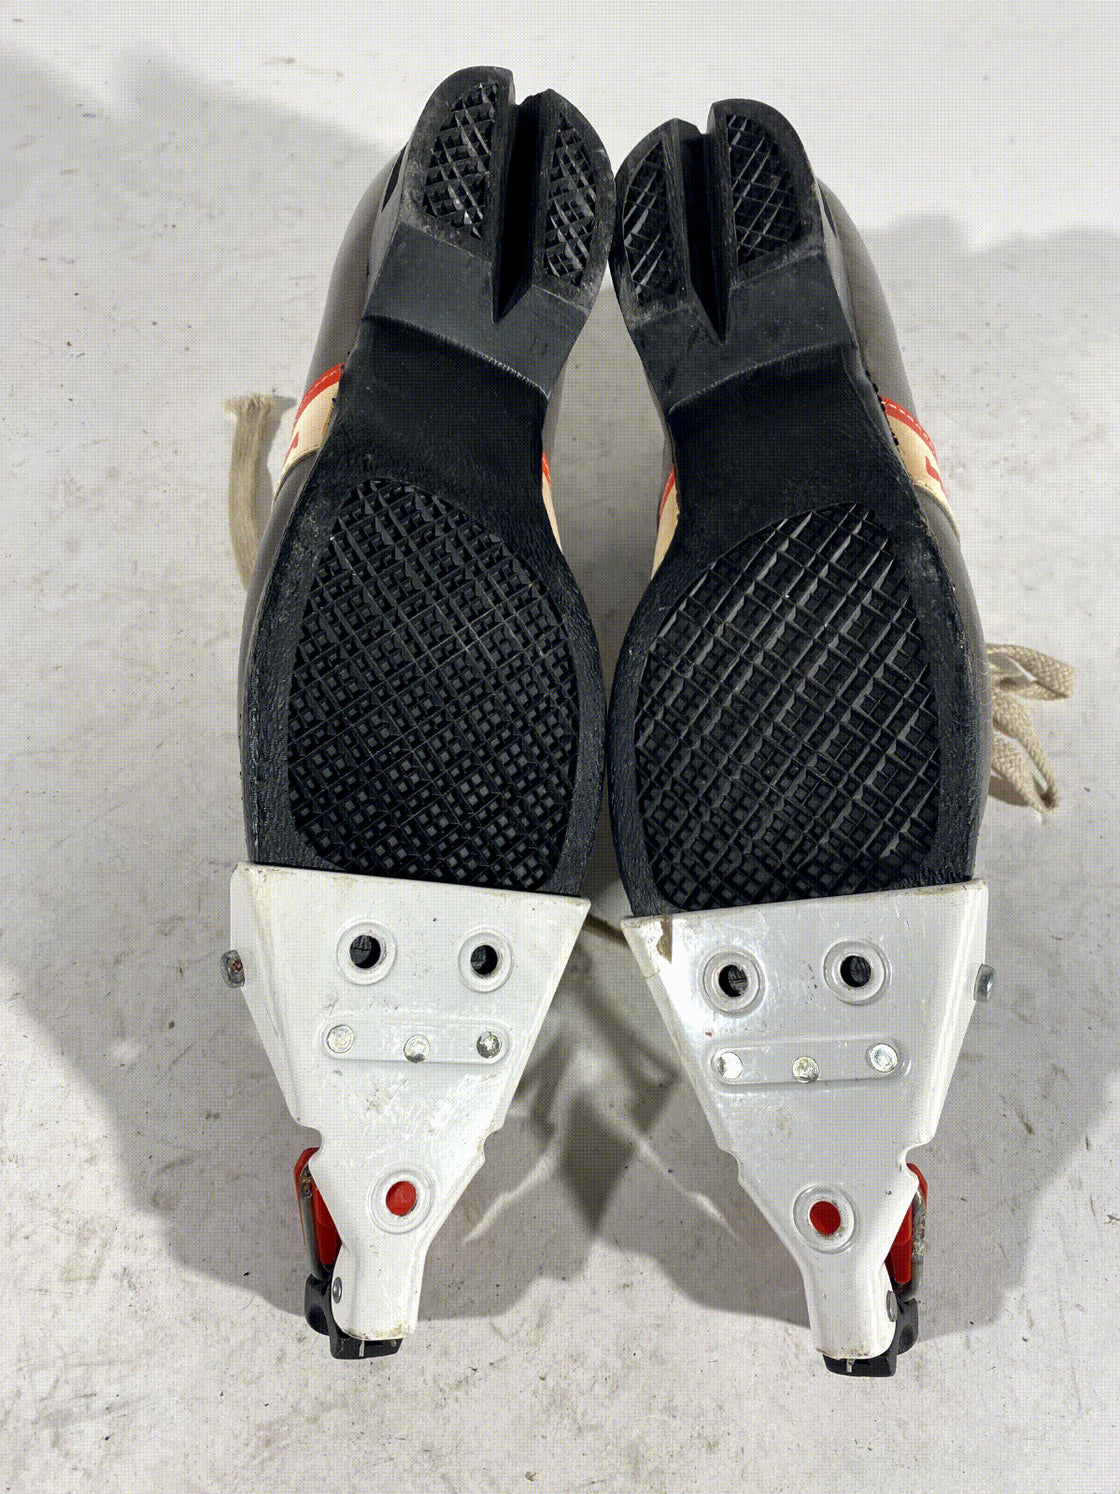 Botas Kids Vintage Cross Country Ski Boots Touring Norm 50mm 3pin Size EU32 U1.5